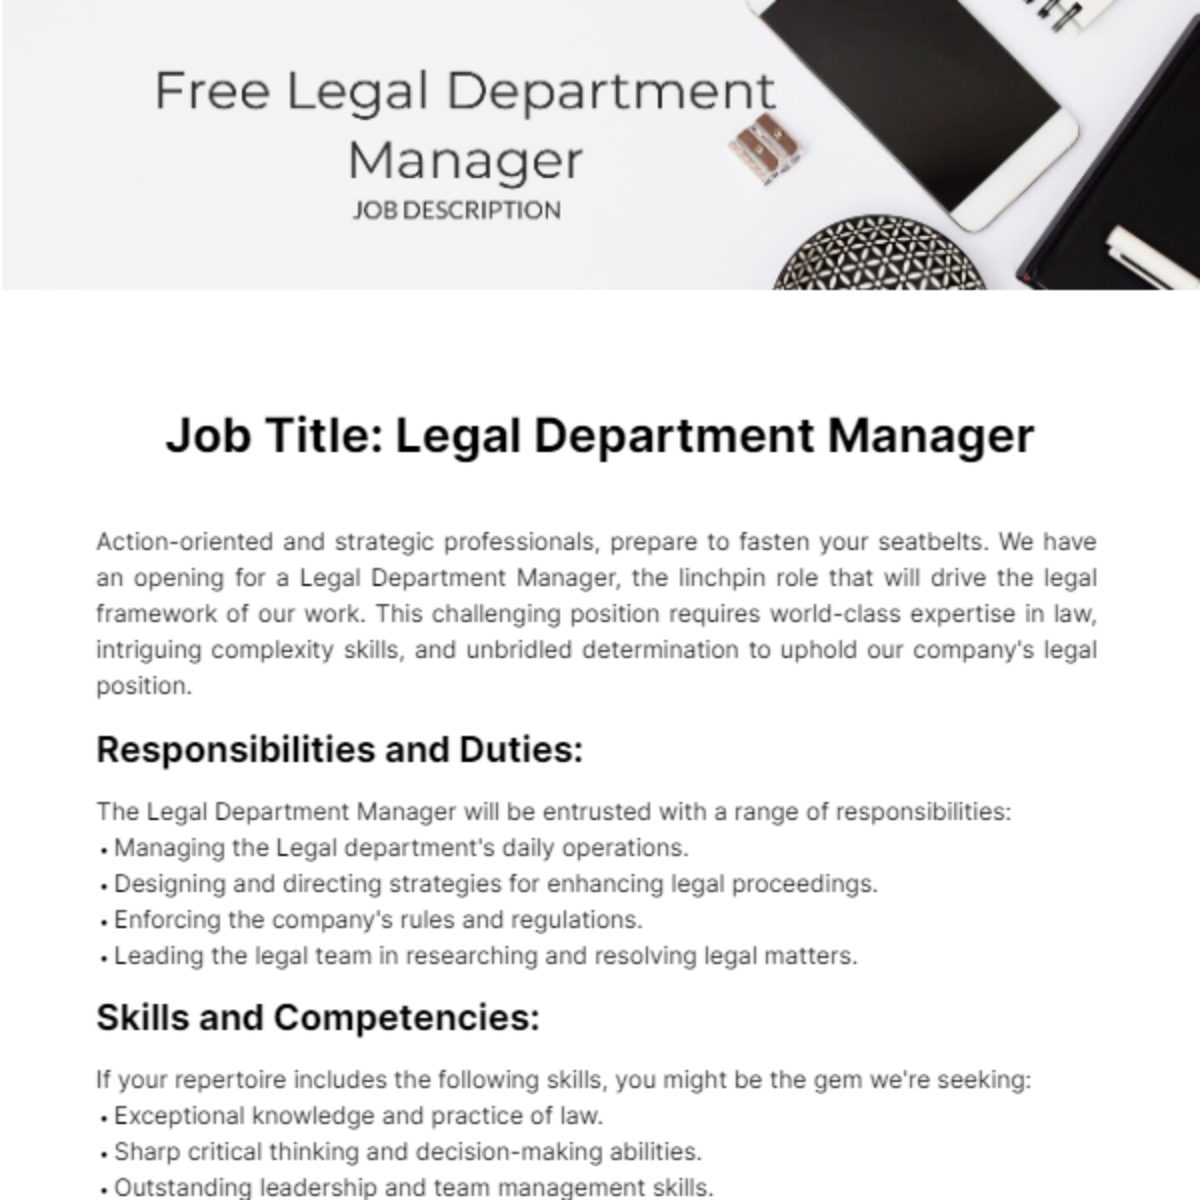 Free Legal Department Manager Job Description Template